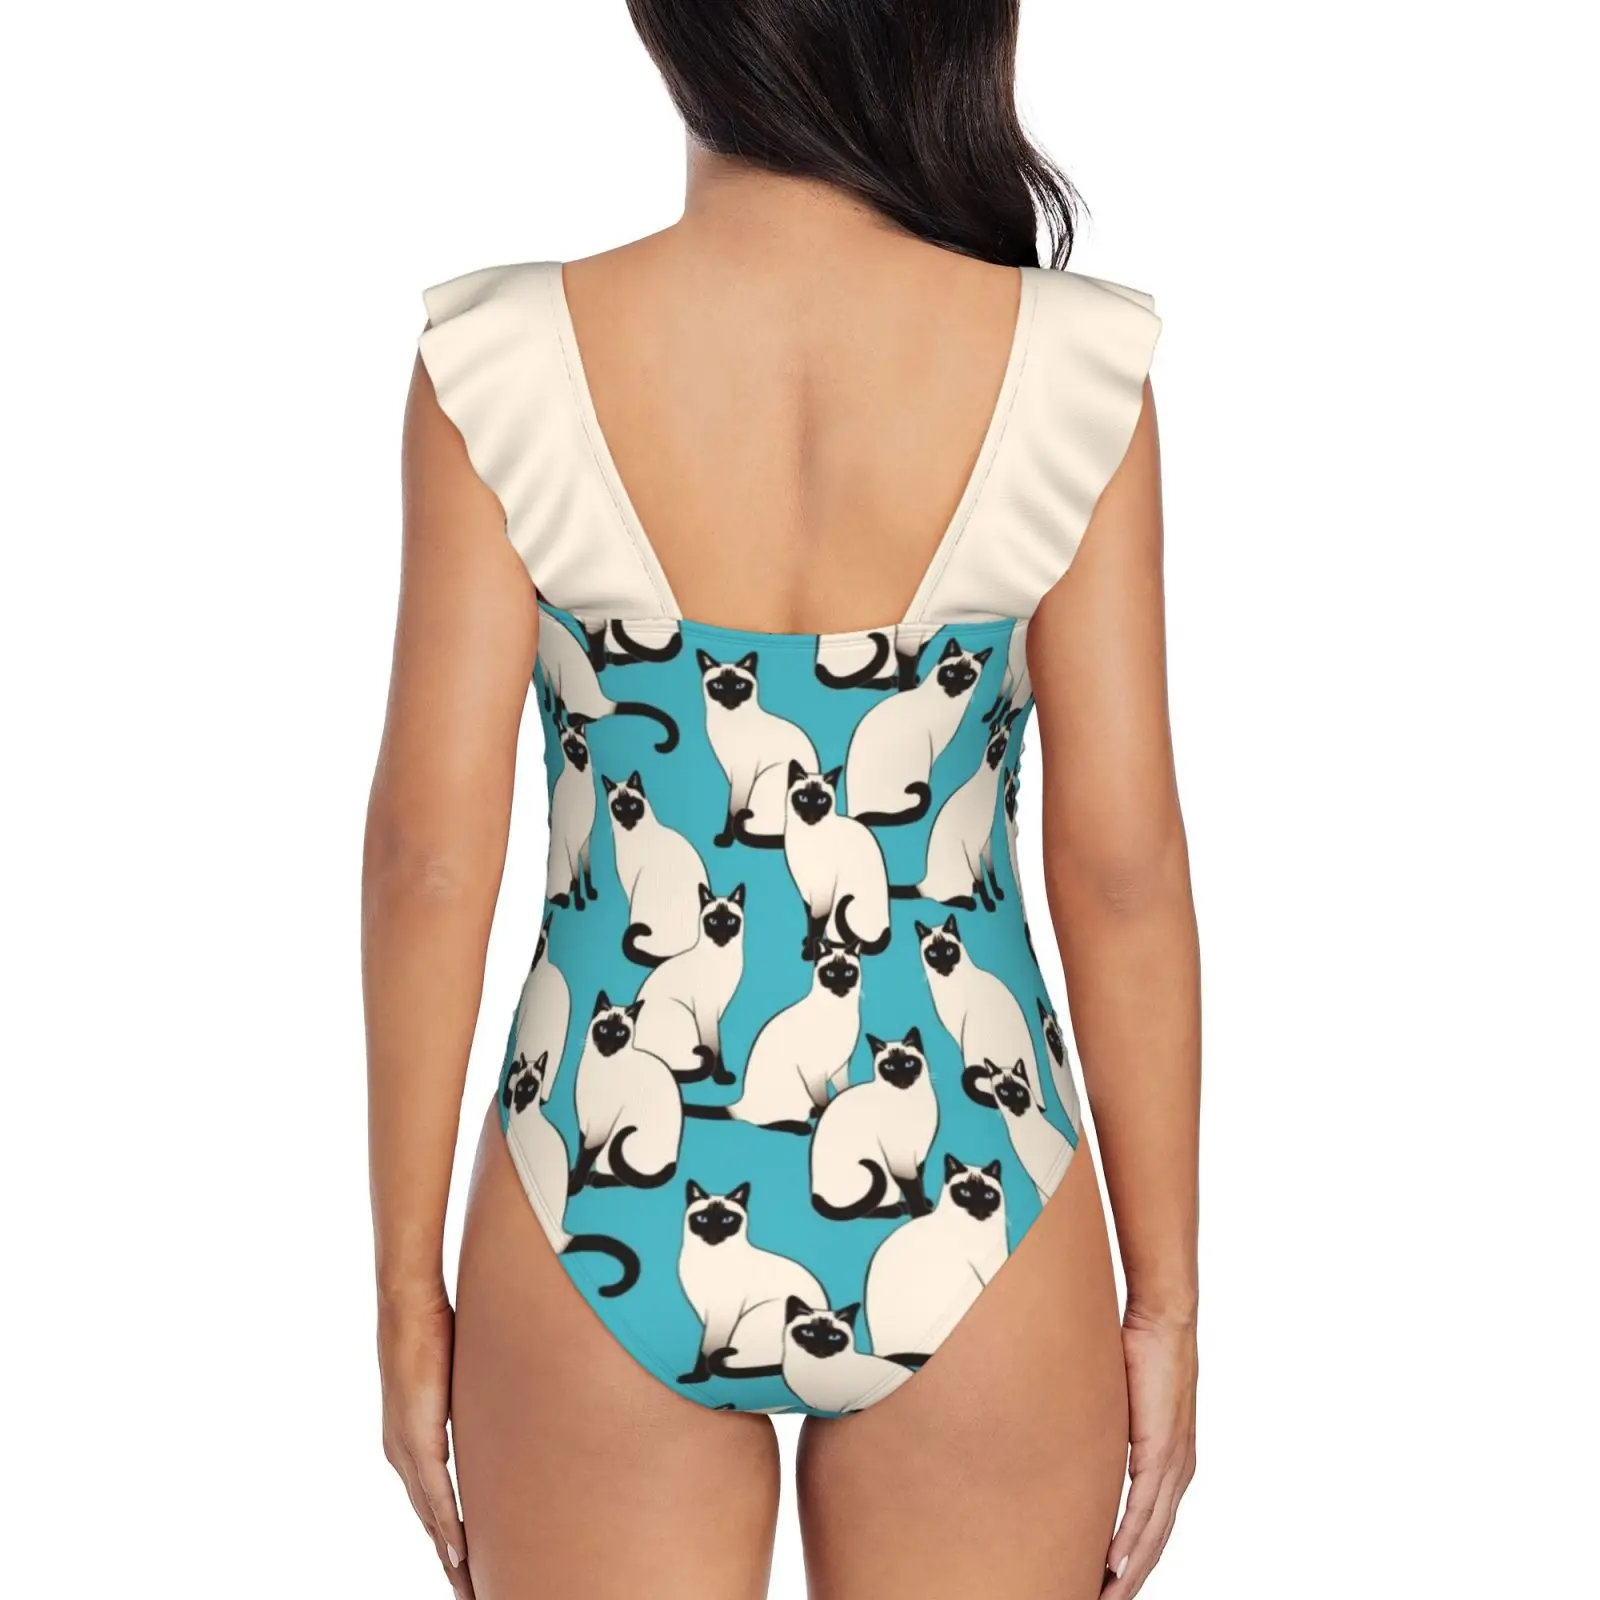 Siamese Cats Dense On Turquoise One-Piece Swimsuit Women Ruffle Bathing Suits New Girl Beach Swimwear Pattern Turquoise Siamese